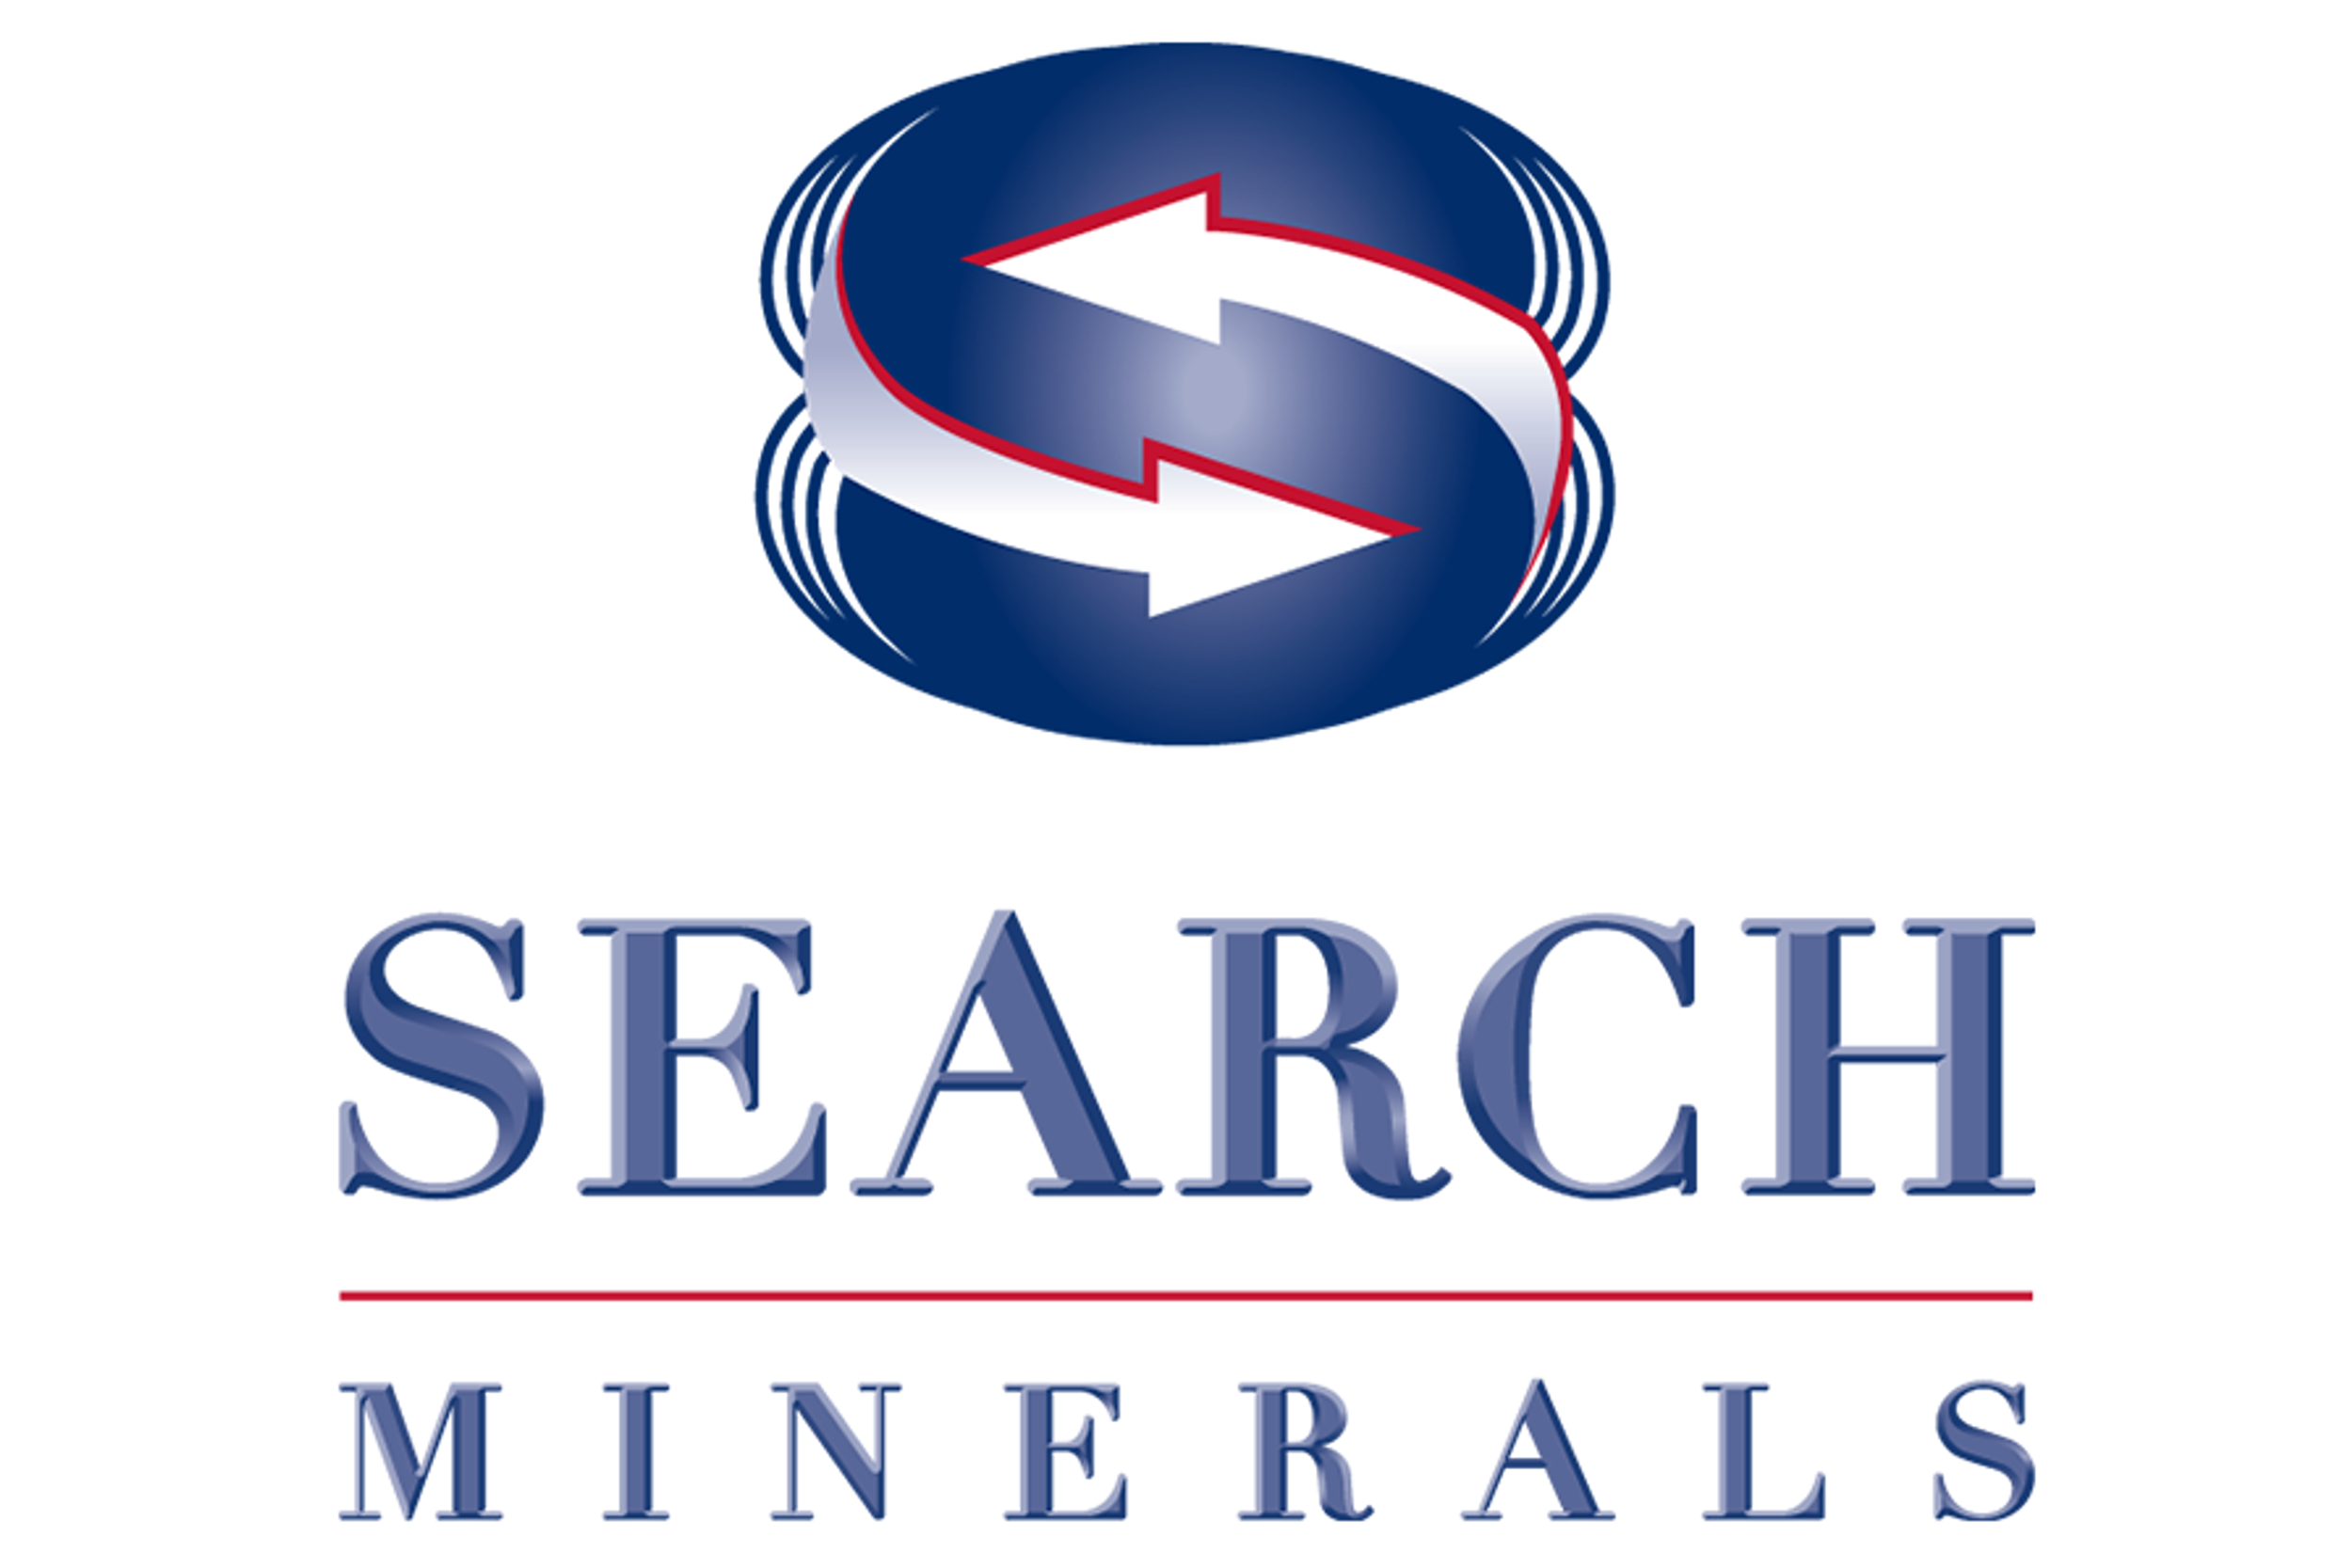 Search Minerals